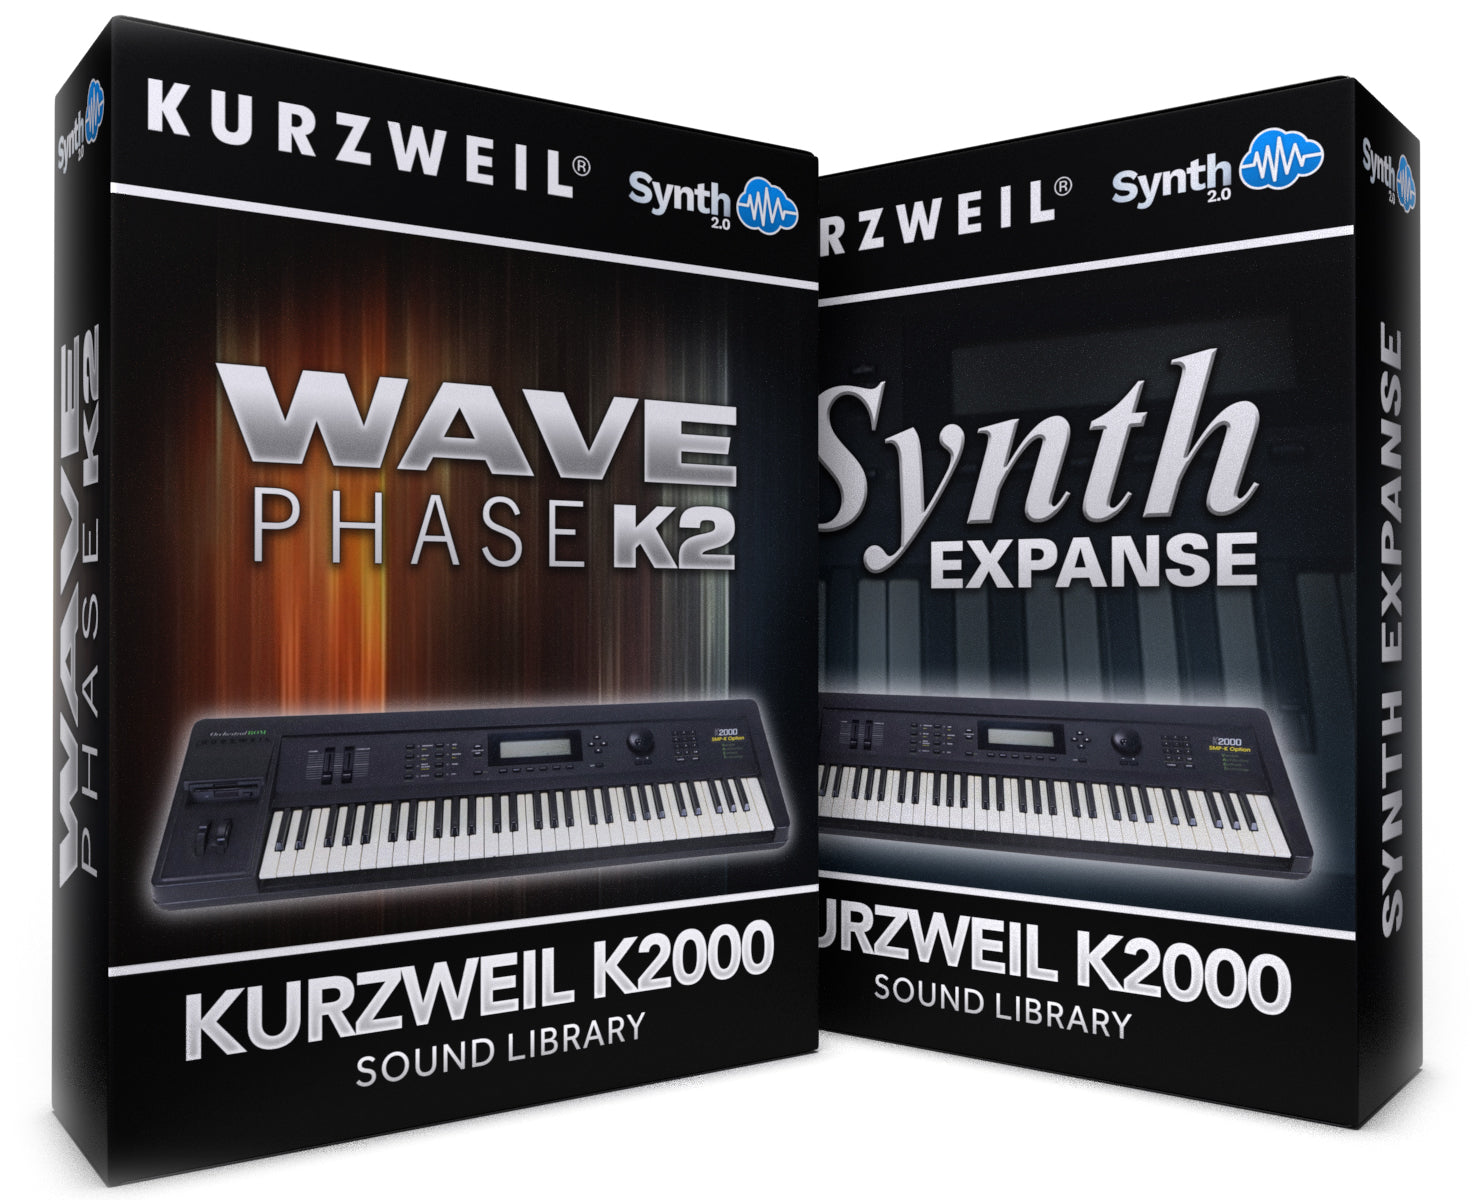 TPL041 - ( Bundle ) - Wave Phase K2 + Synth Expanse - Kurzweil K2000